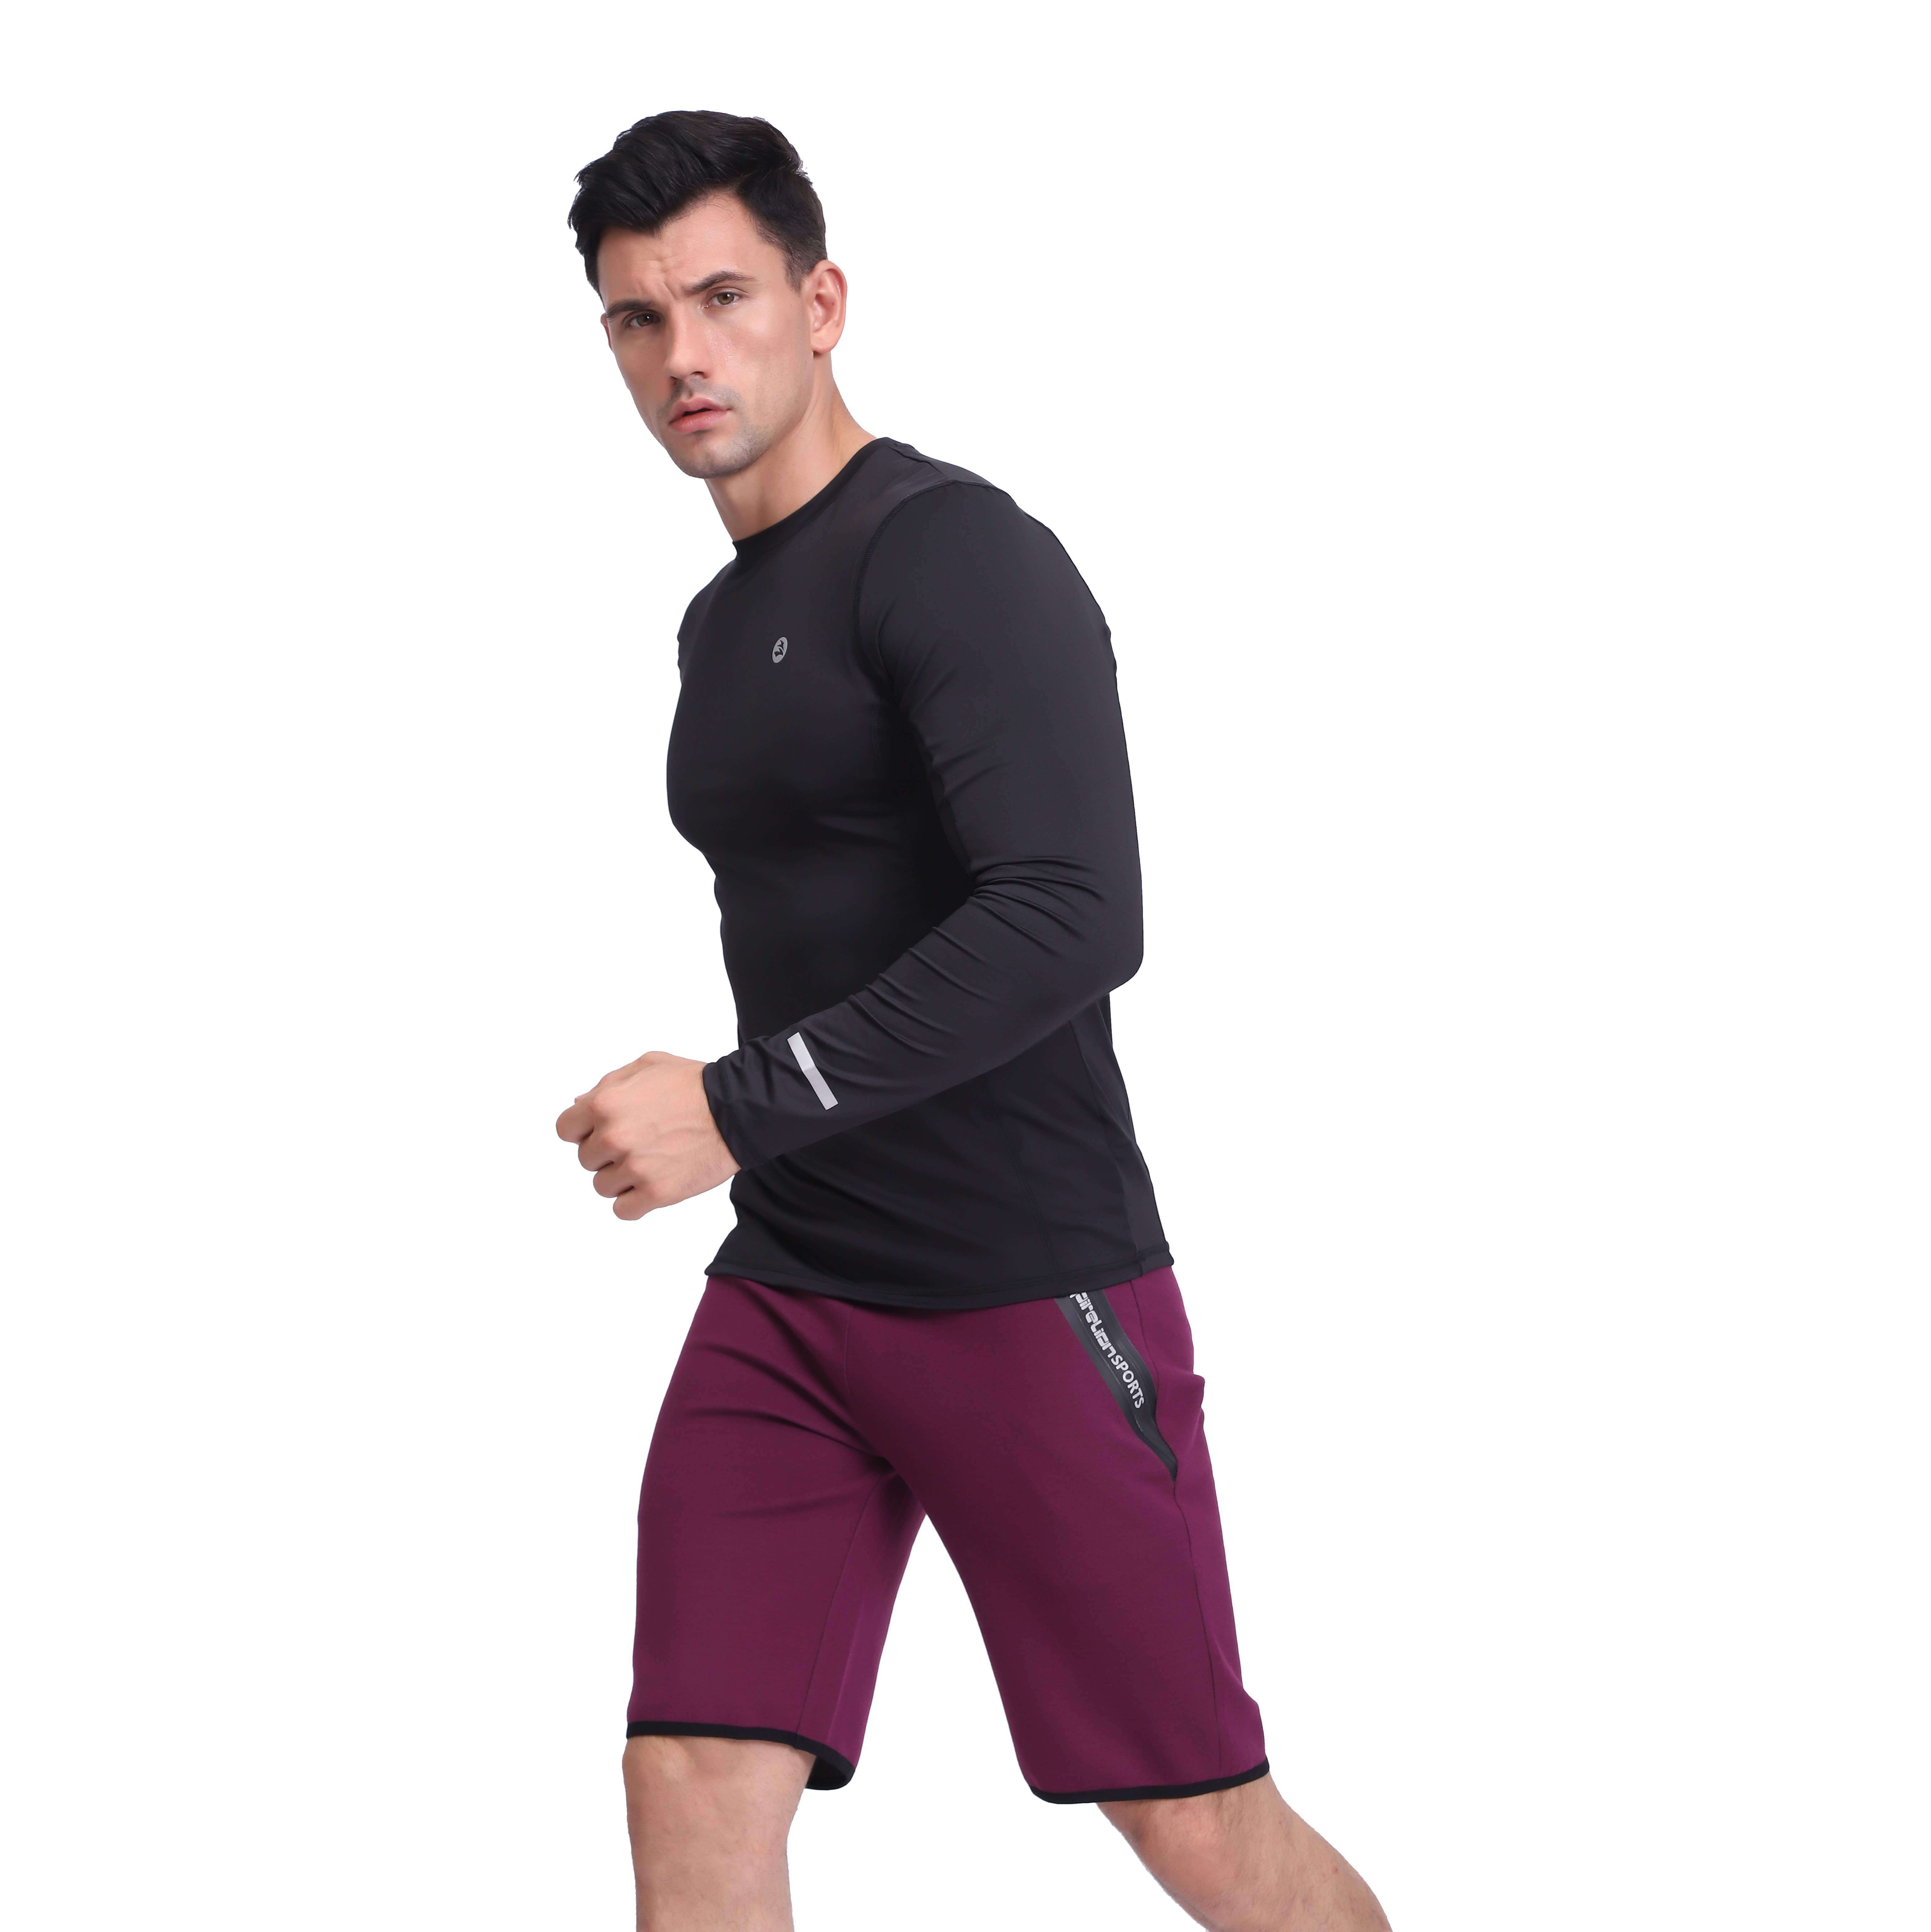 Men's Compression Base Layer Long Sleeve Top Running Shirt